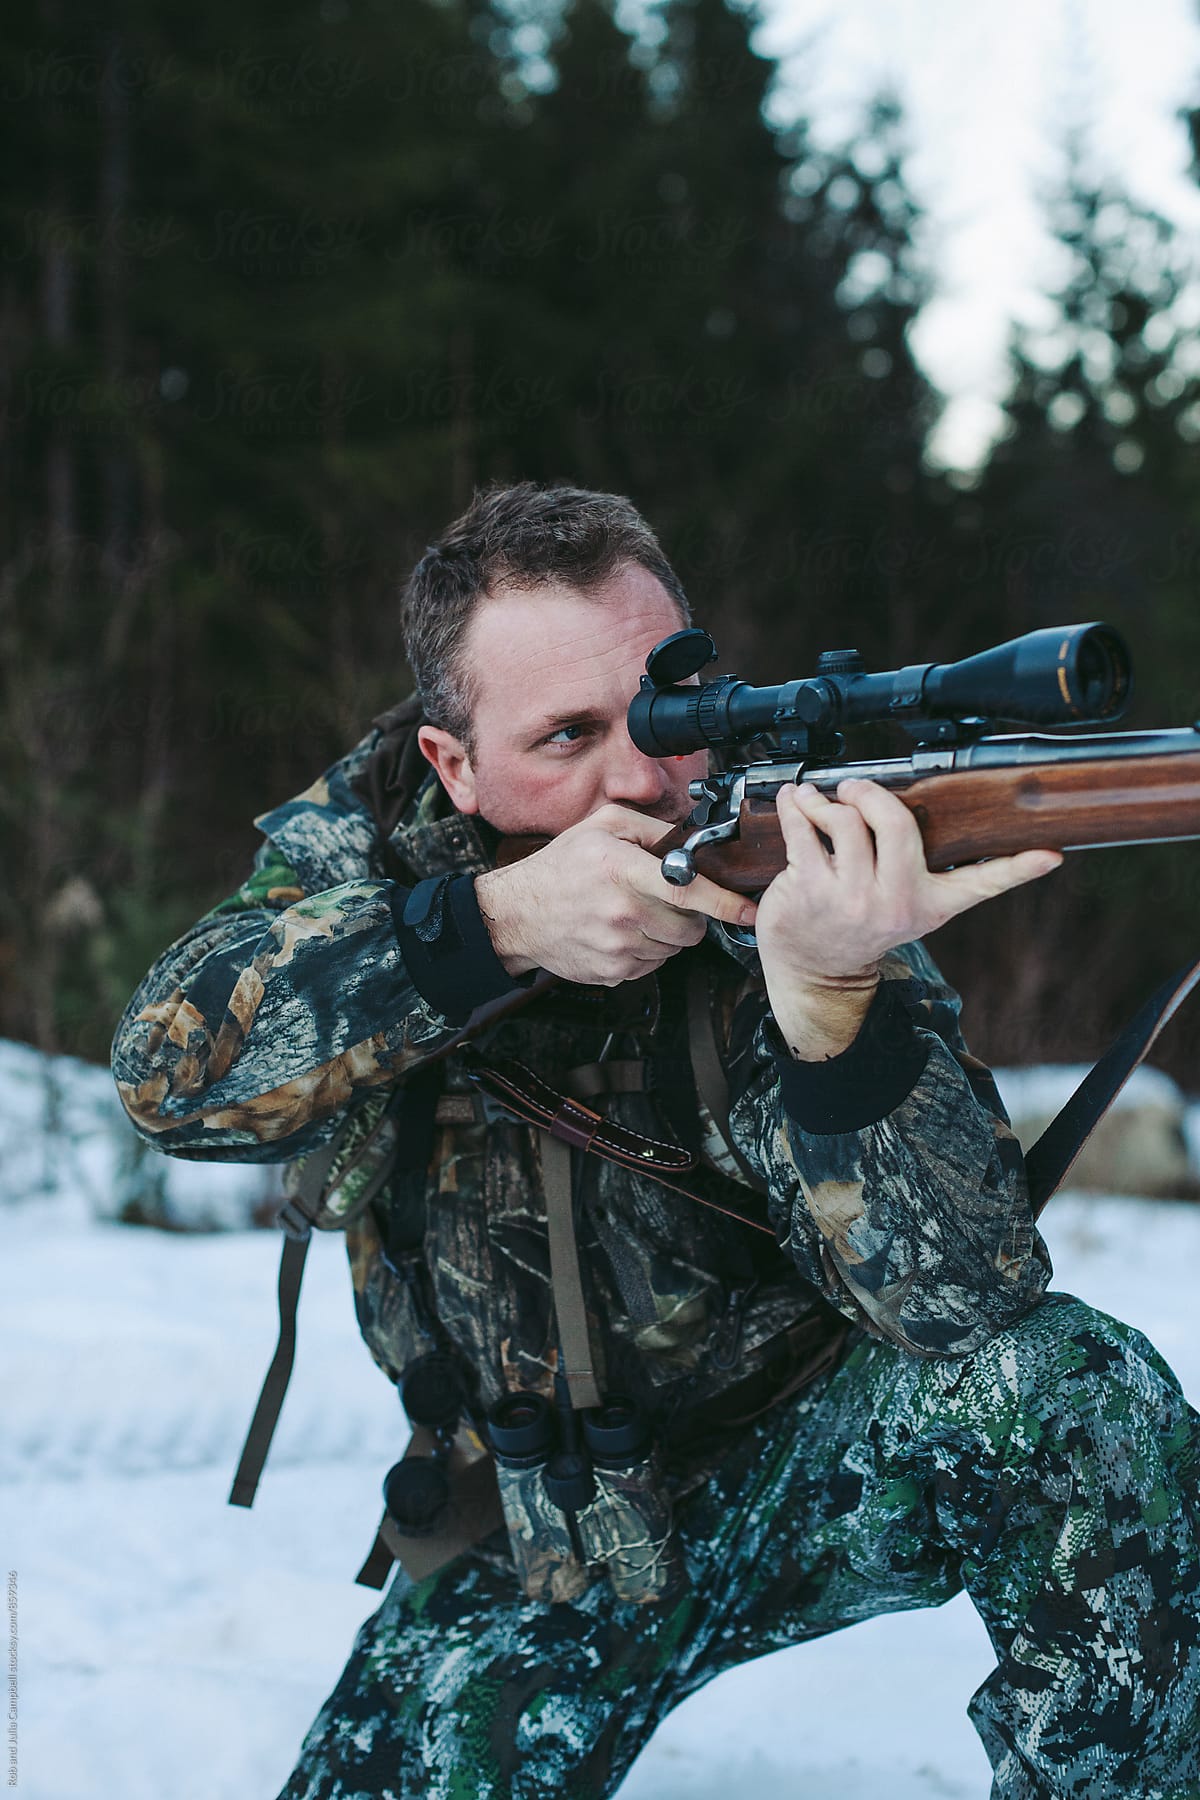 Hunter taking aim with rifle